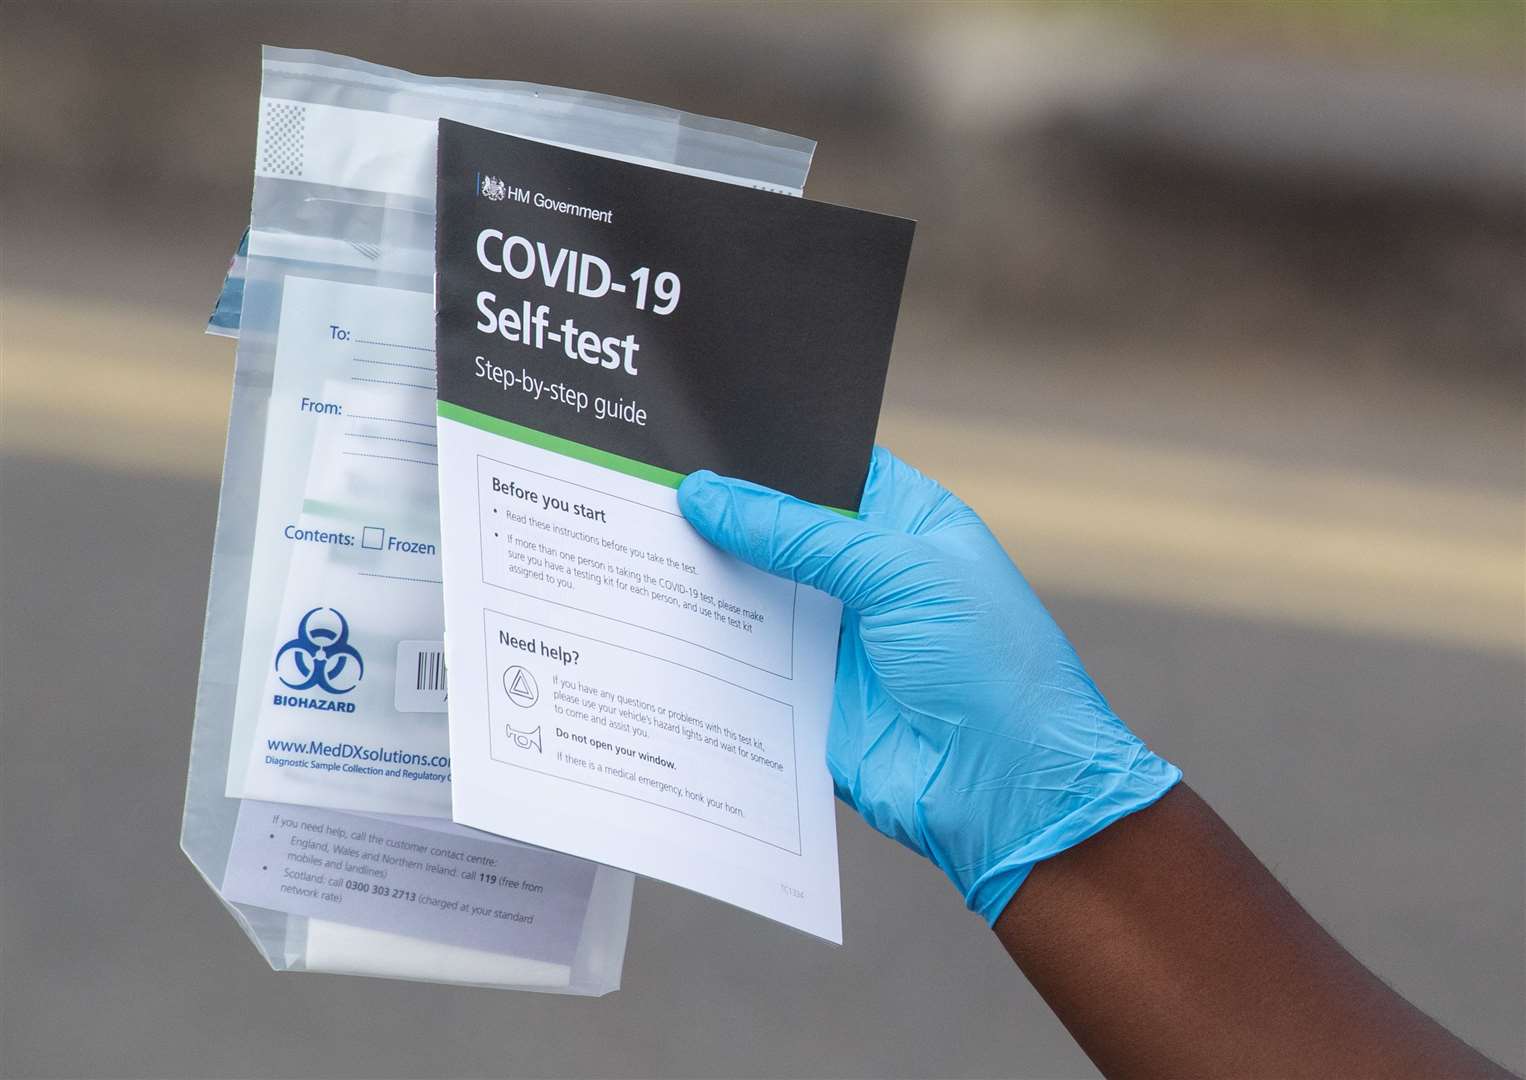 Staff hand out self-test kits at a coronavirus testing centre (Dominic Lipinski/PA)